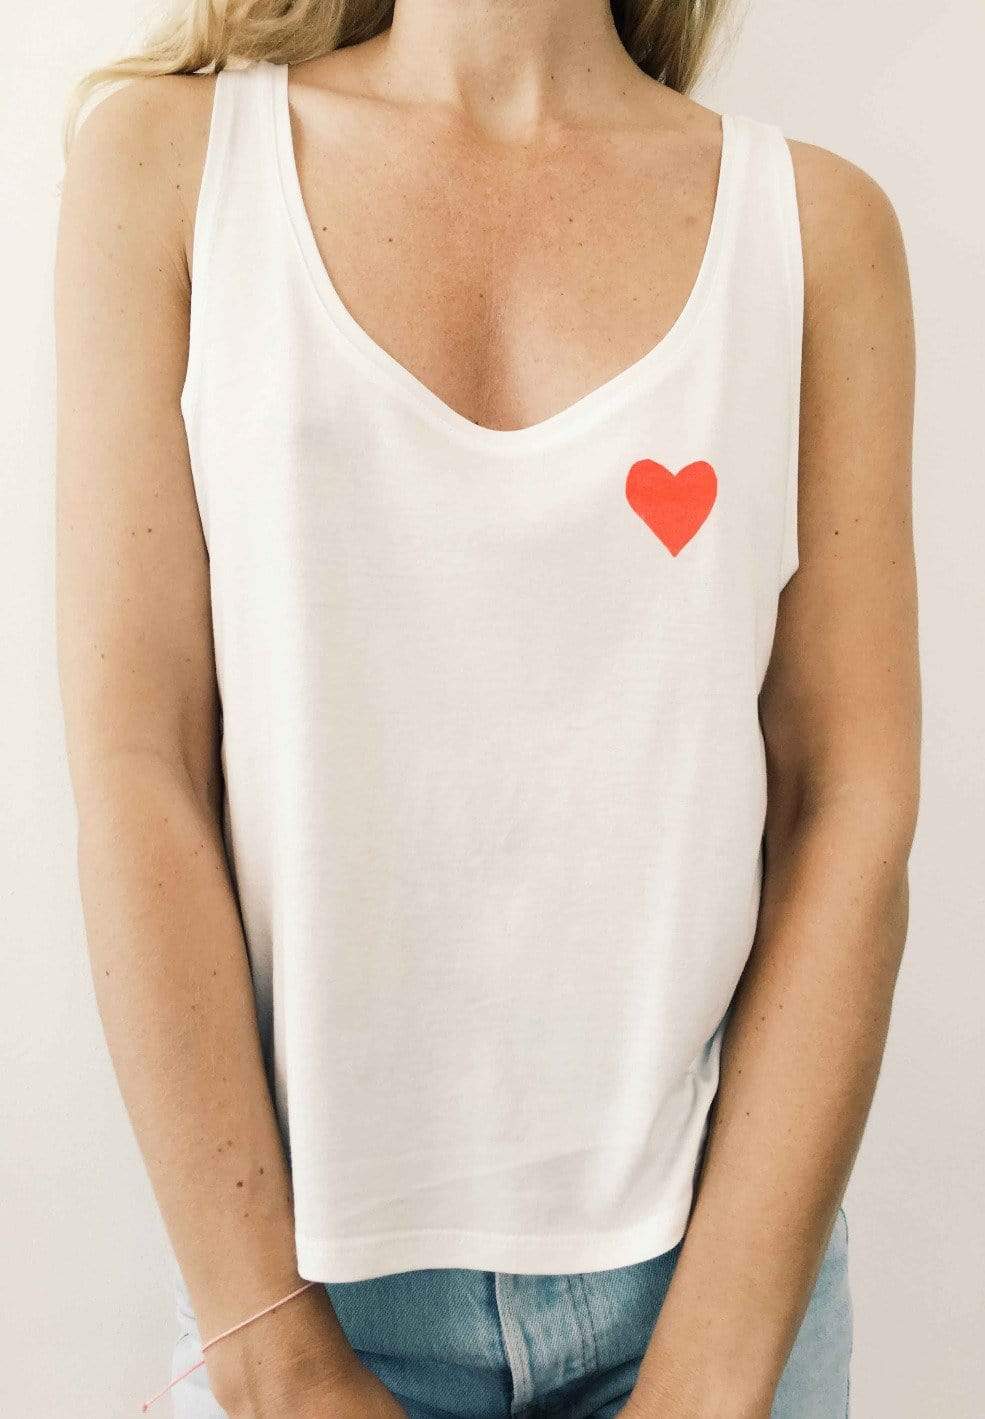 iki M. Tops & T-Shirts Cropped Top Herz Faire Mode Women muenchen